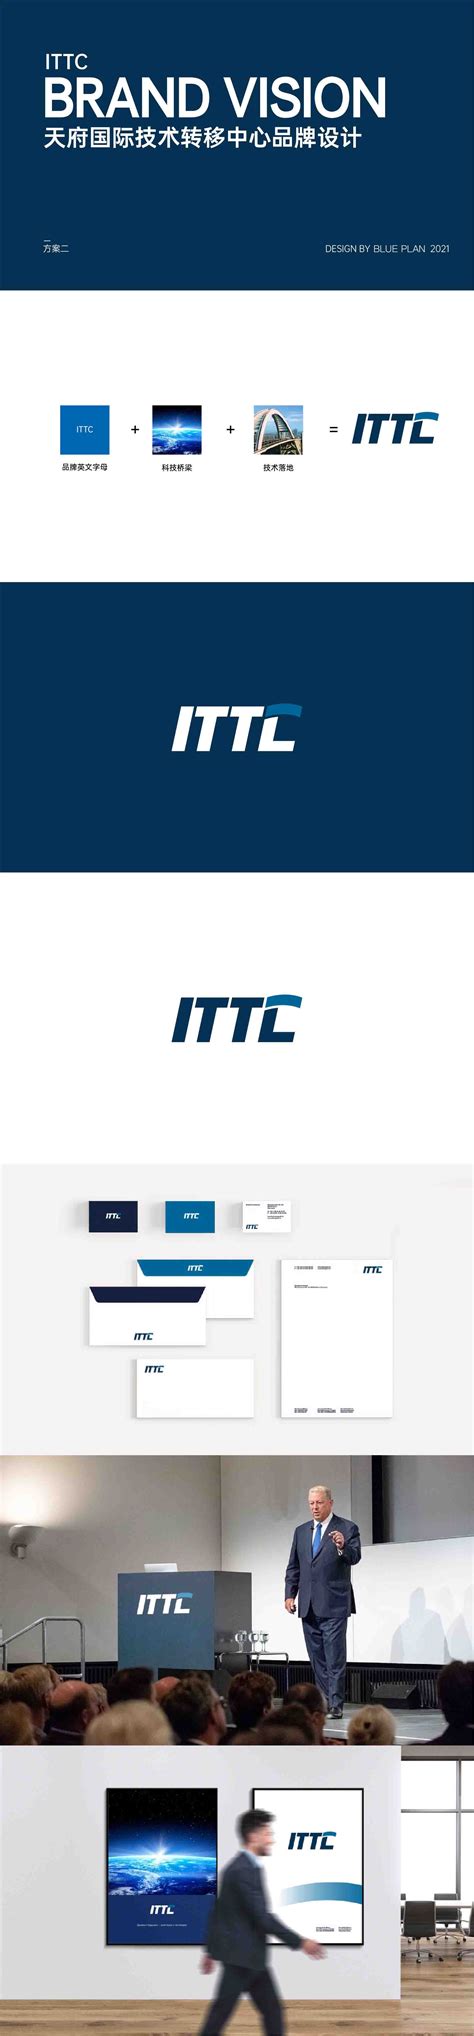 ITTC天府国际技术转移中心_蓝计划|成都创新咨询设计公司_您的品牌合伙人_让蓝图看得见！